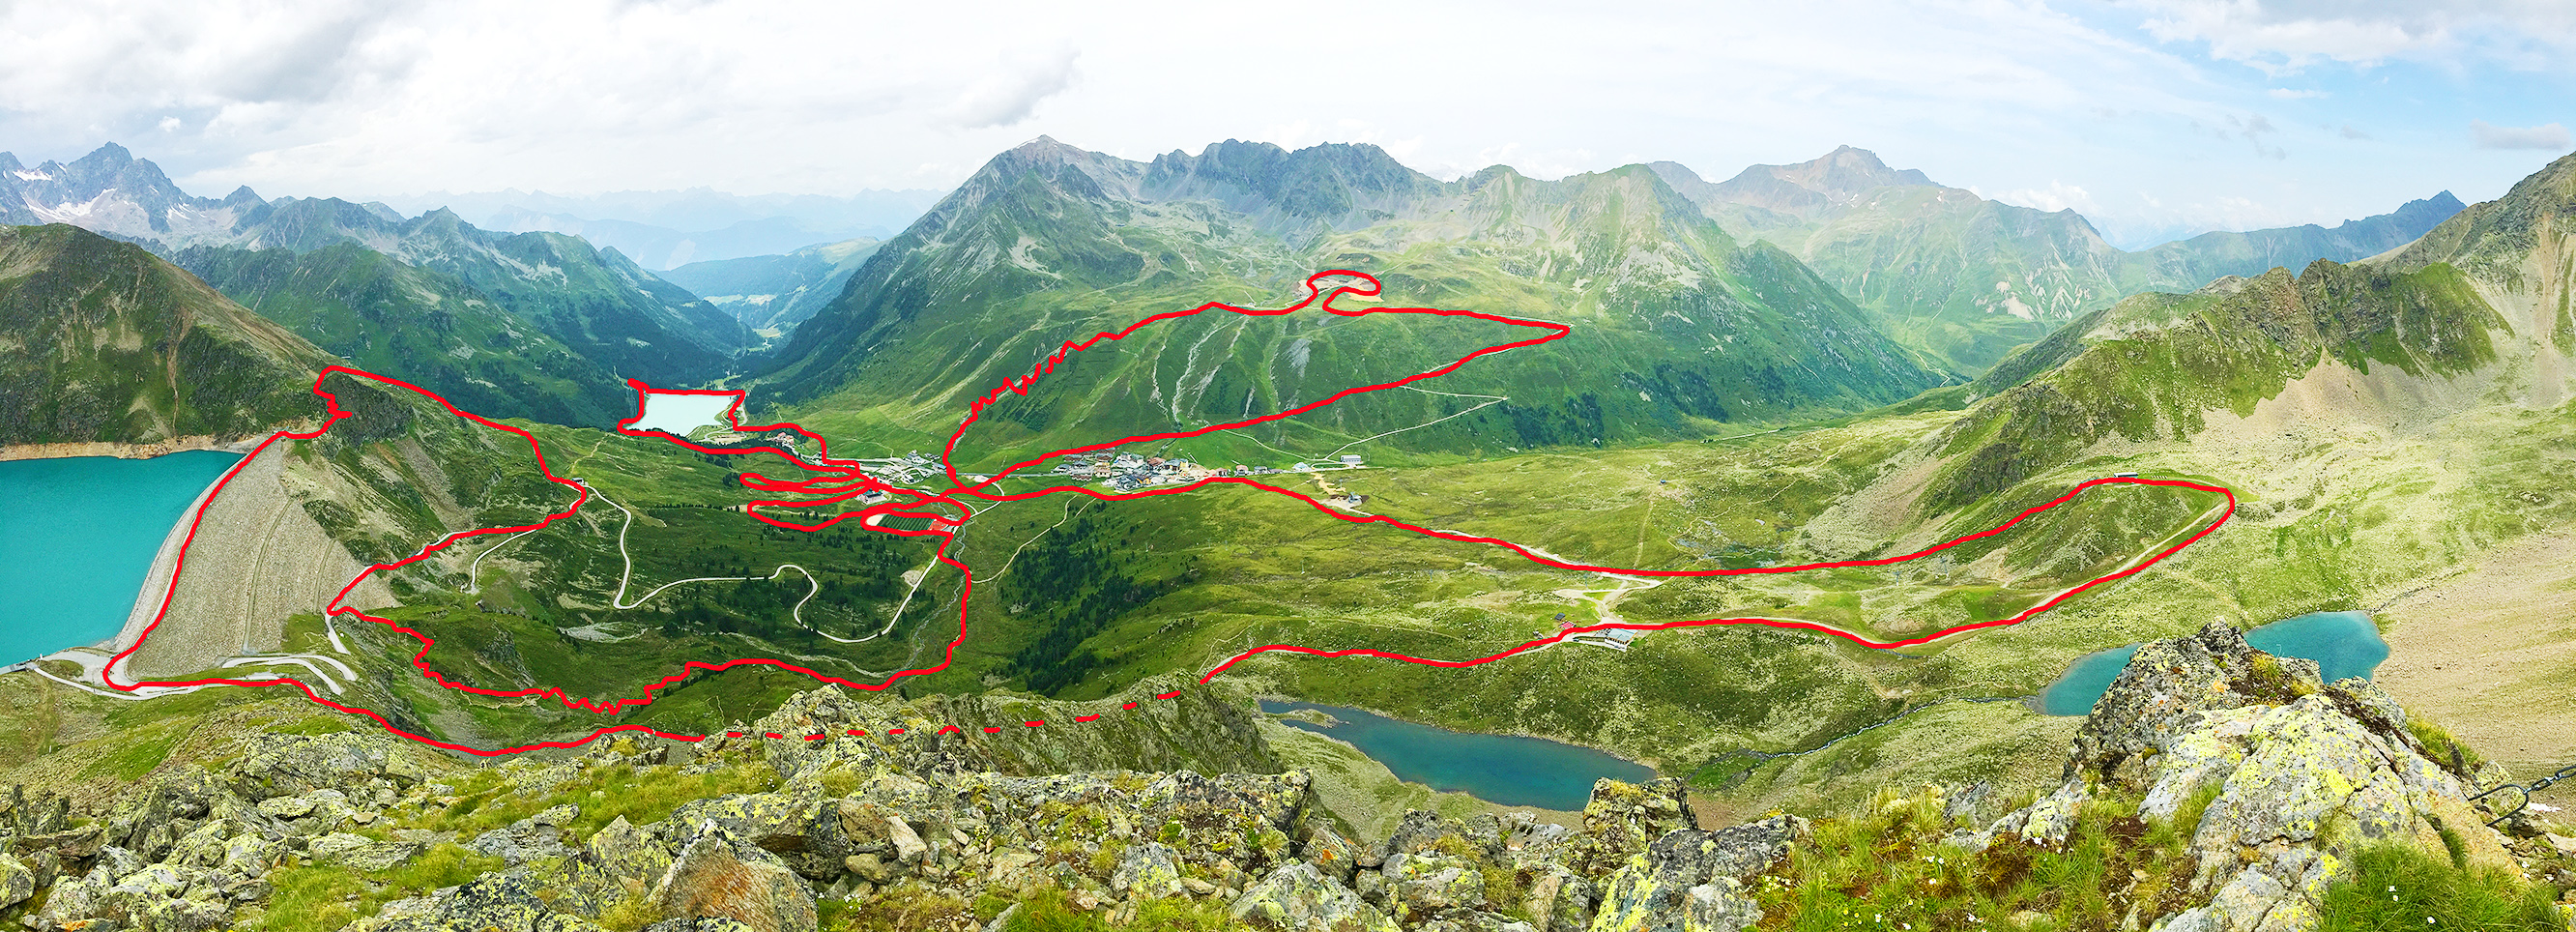 XLETIX Tirol 2016 L-Distanz Strecke